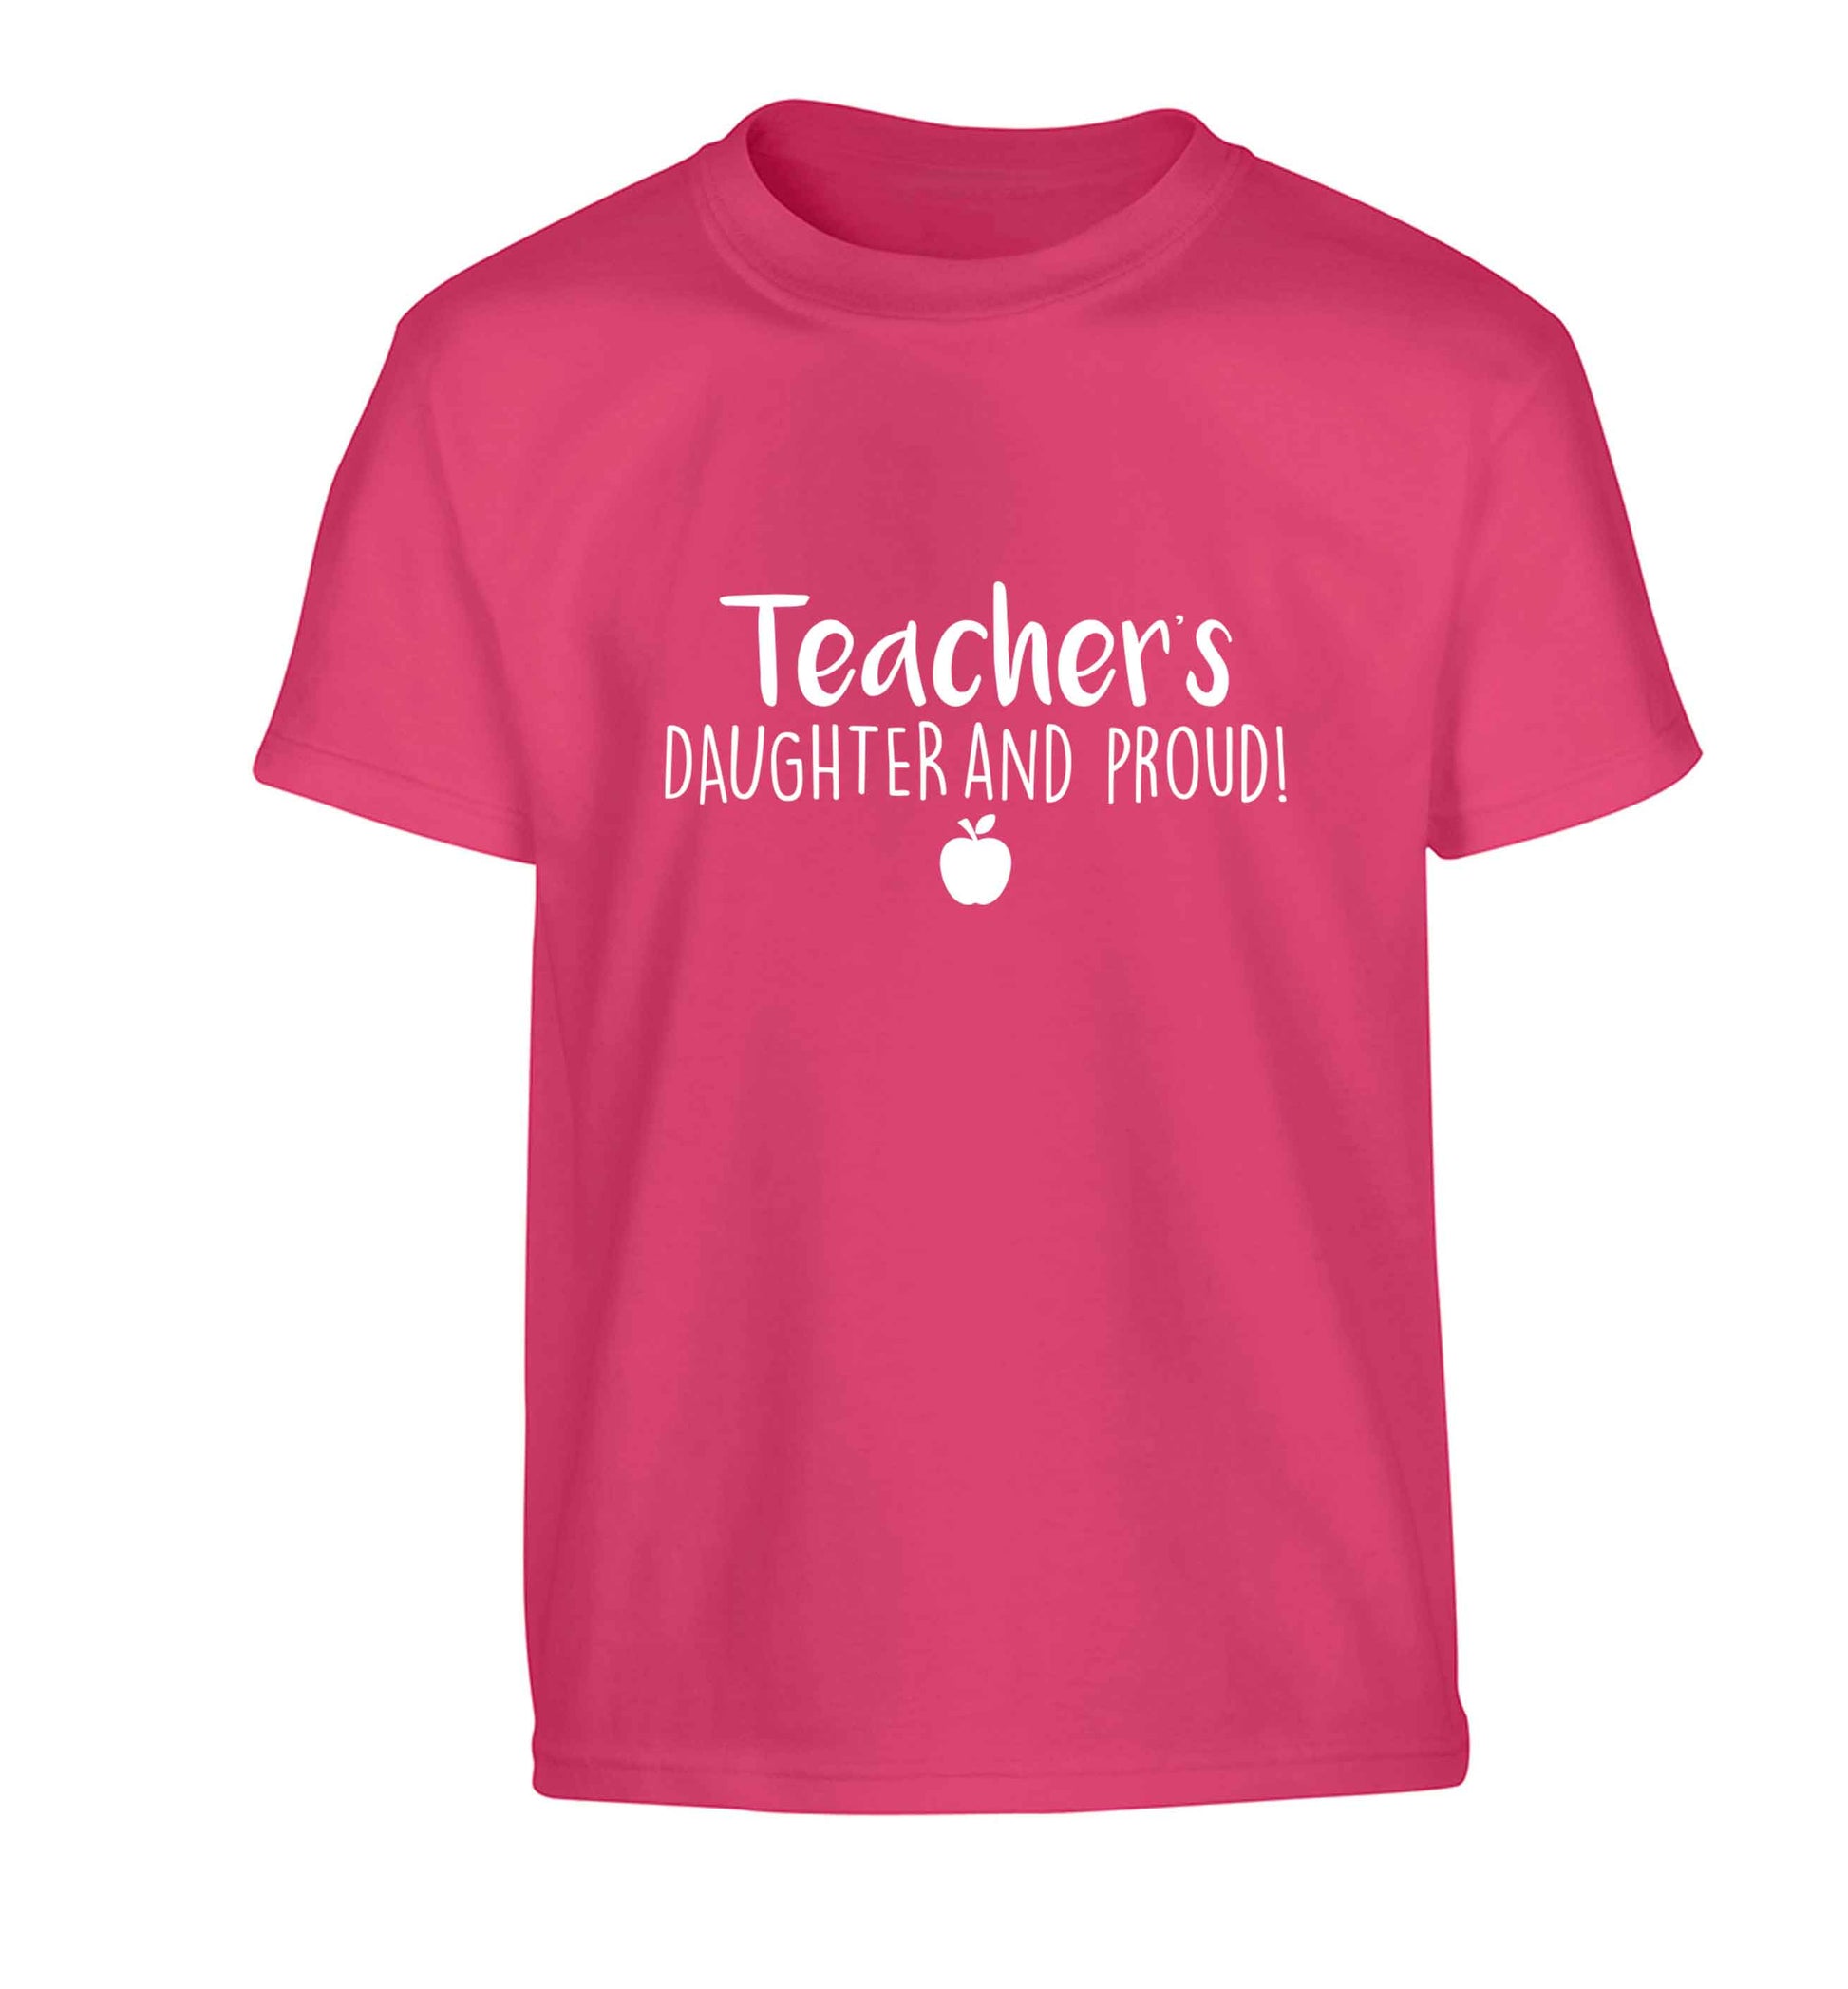 Teachers daughter and proud Children's pink Tshirt 12-13 Years